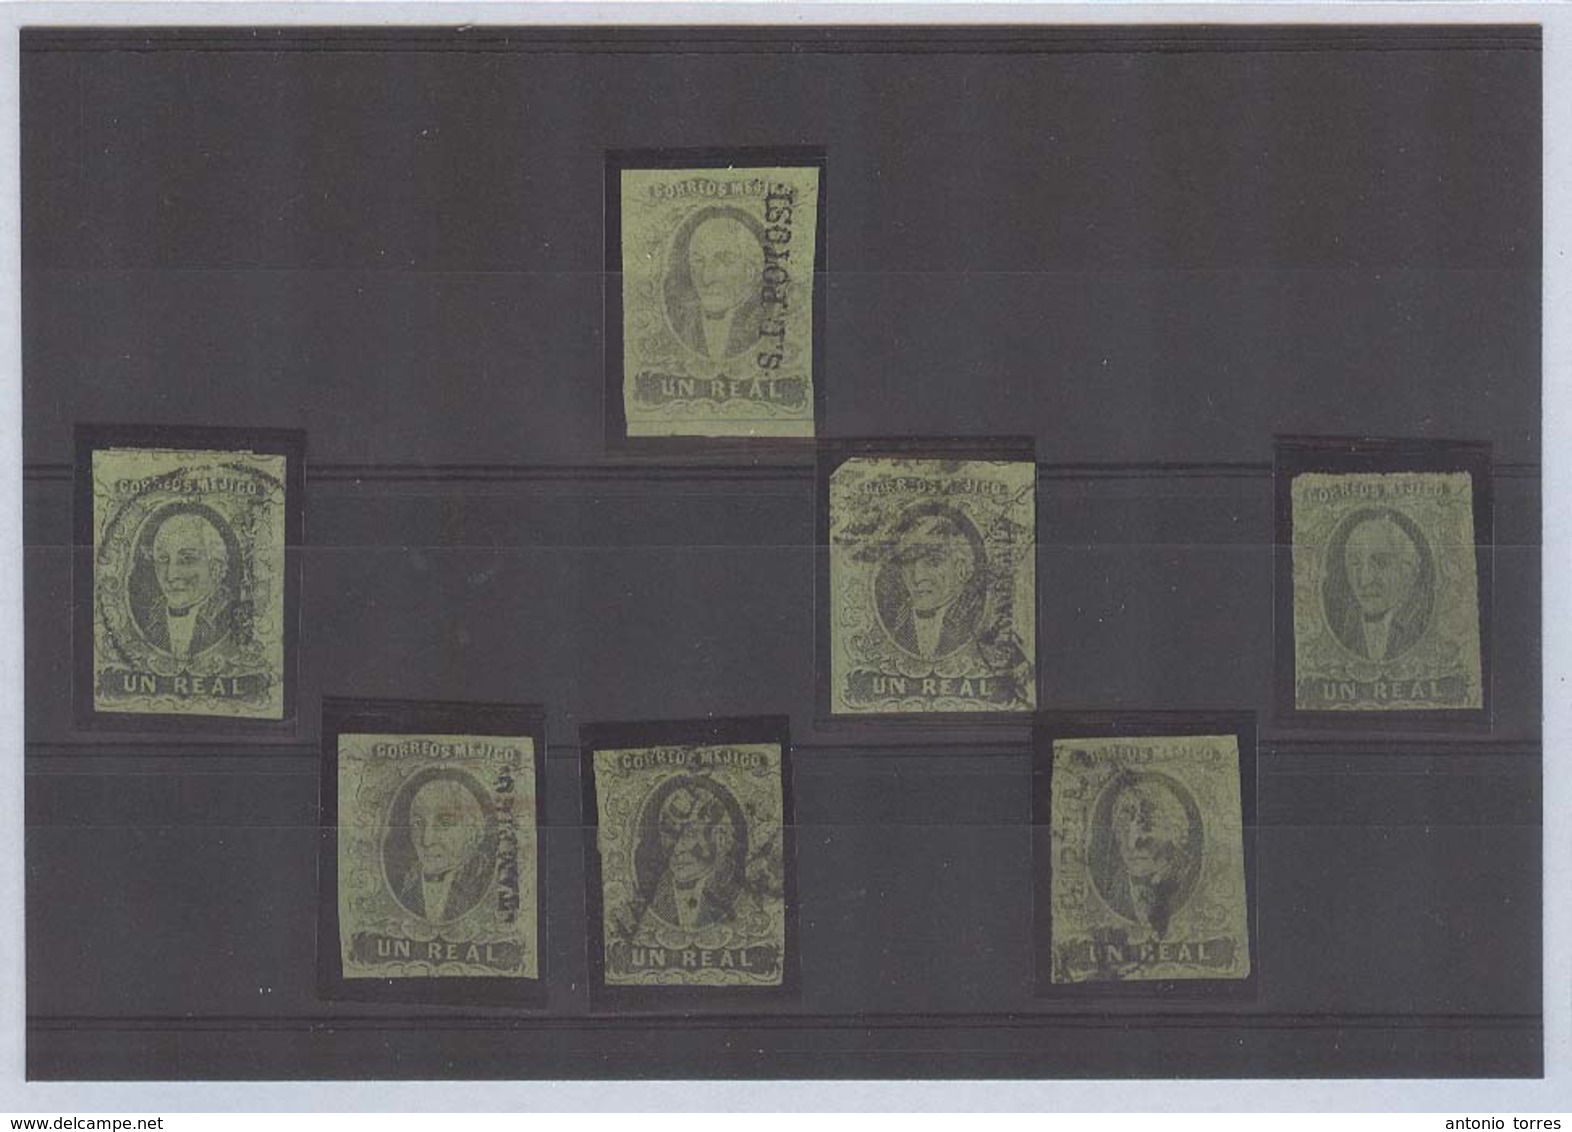 MEXICO. 1861. Sc 7º. 1rl Black Green Selection Of Seven Names Incl SLP Gjara, Tampico, Zacatecas. Mint And Used. - Mexique